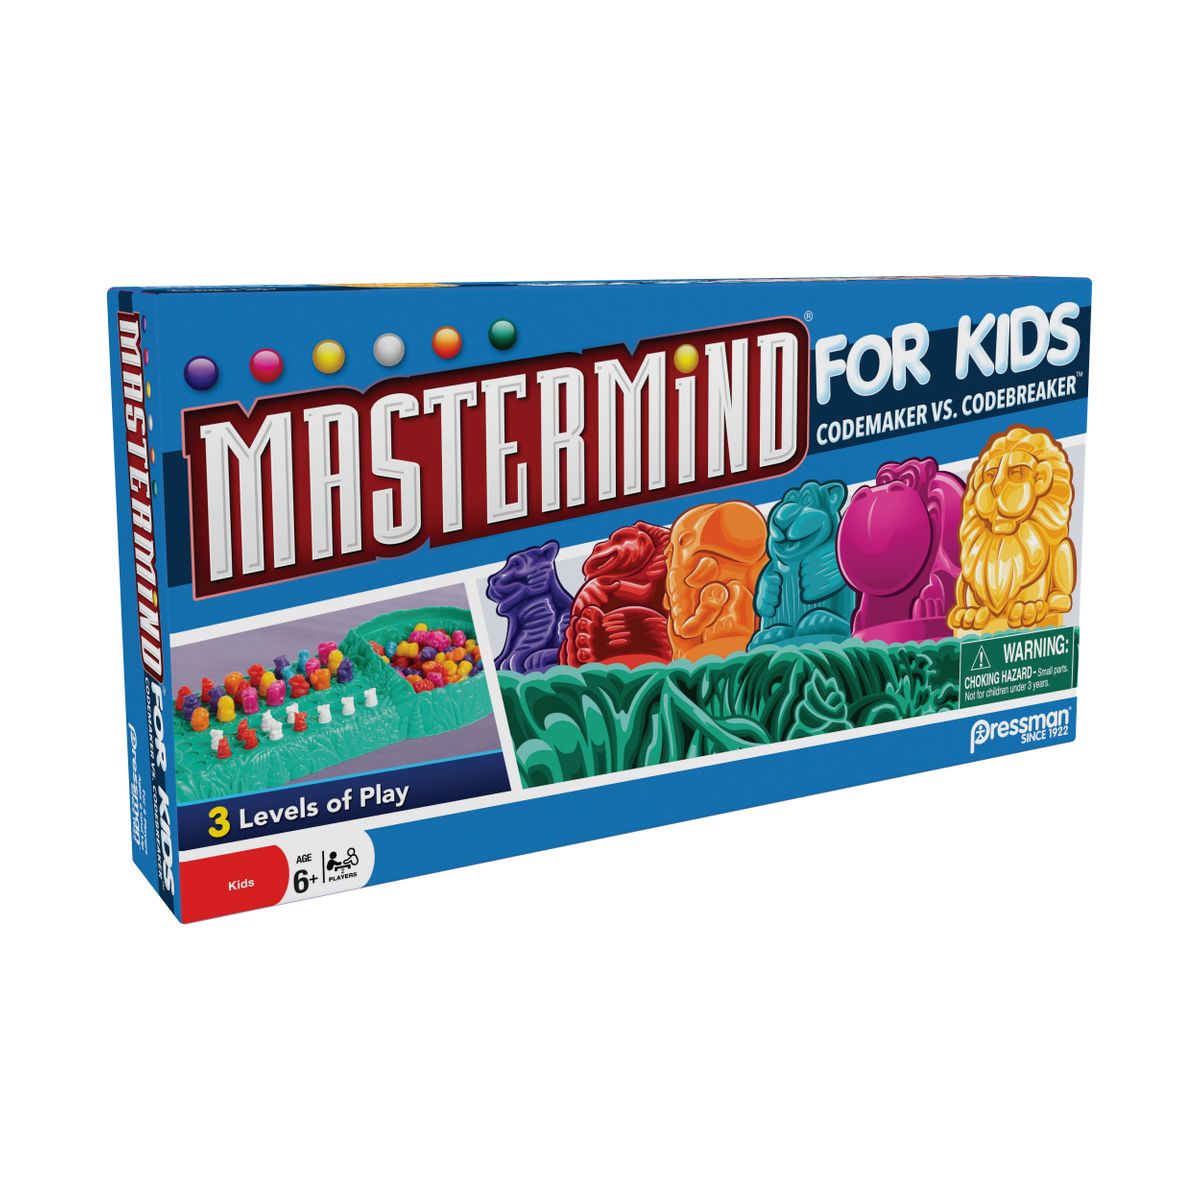 RDY 送料無料 Pressman Mastermind For Kids Board Game - 3つのレベルで遊べる暗号解読ゲーム 楽天海外通販 Pressman Mastermind For Kids Board Game - Codebreaking Game With Three Levels of Play